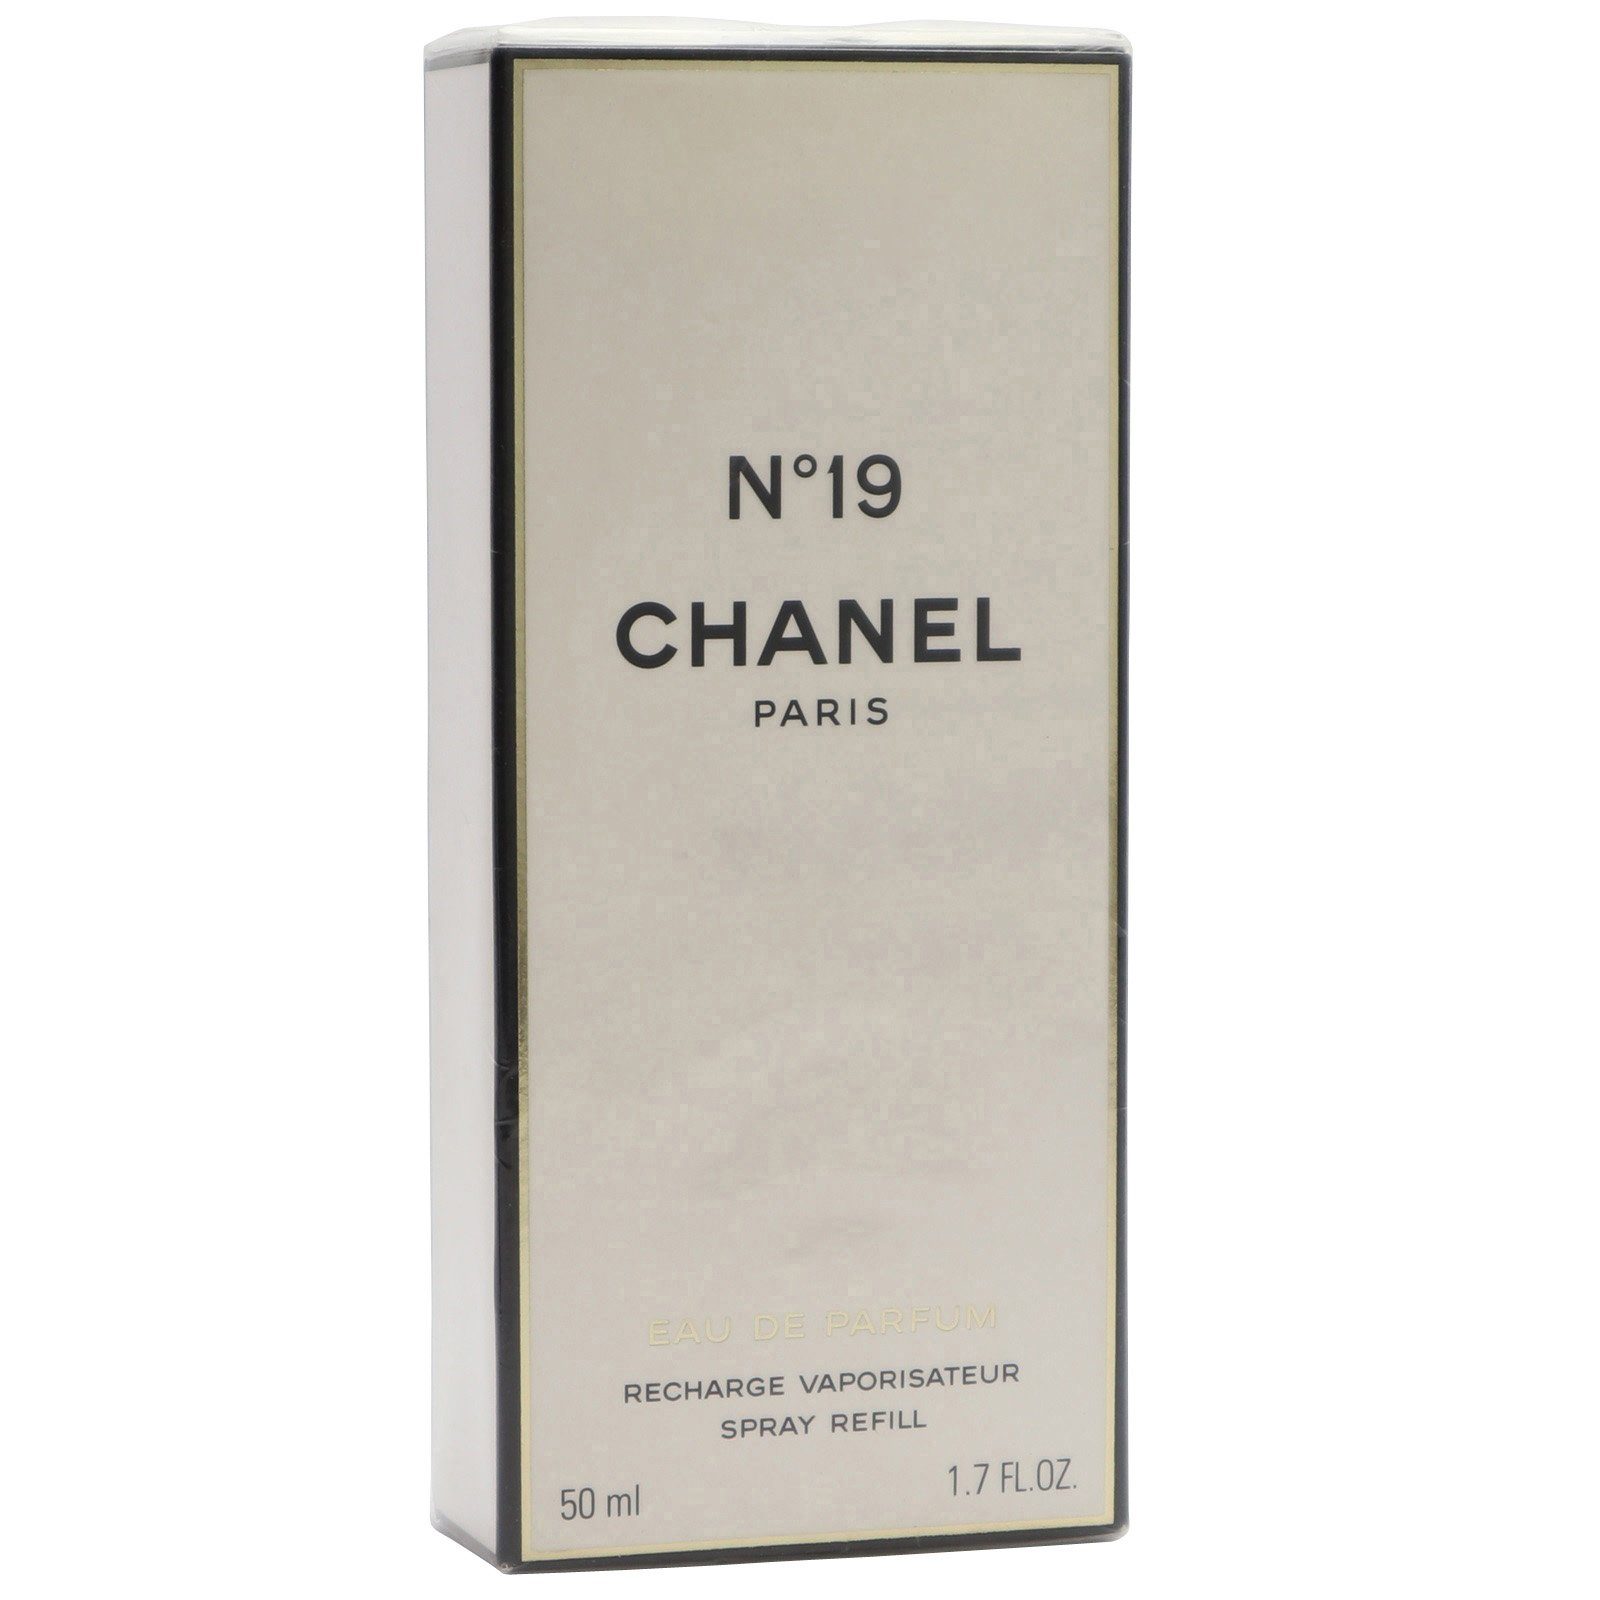 CHANEL Eau de Parfum Chanel No 19 Eau de Parfum Spray 50 ml refill